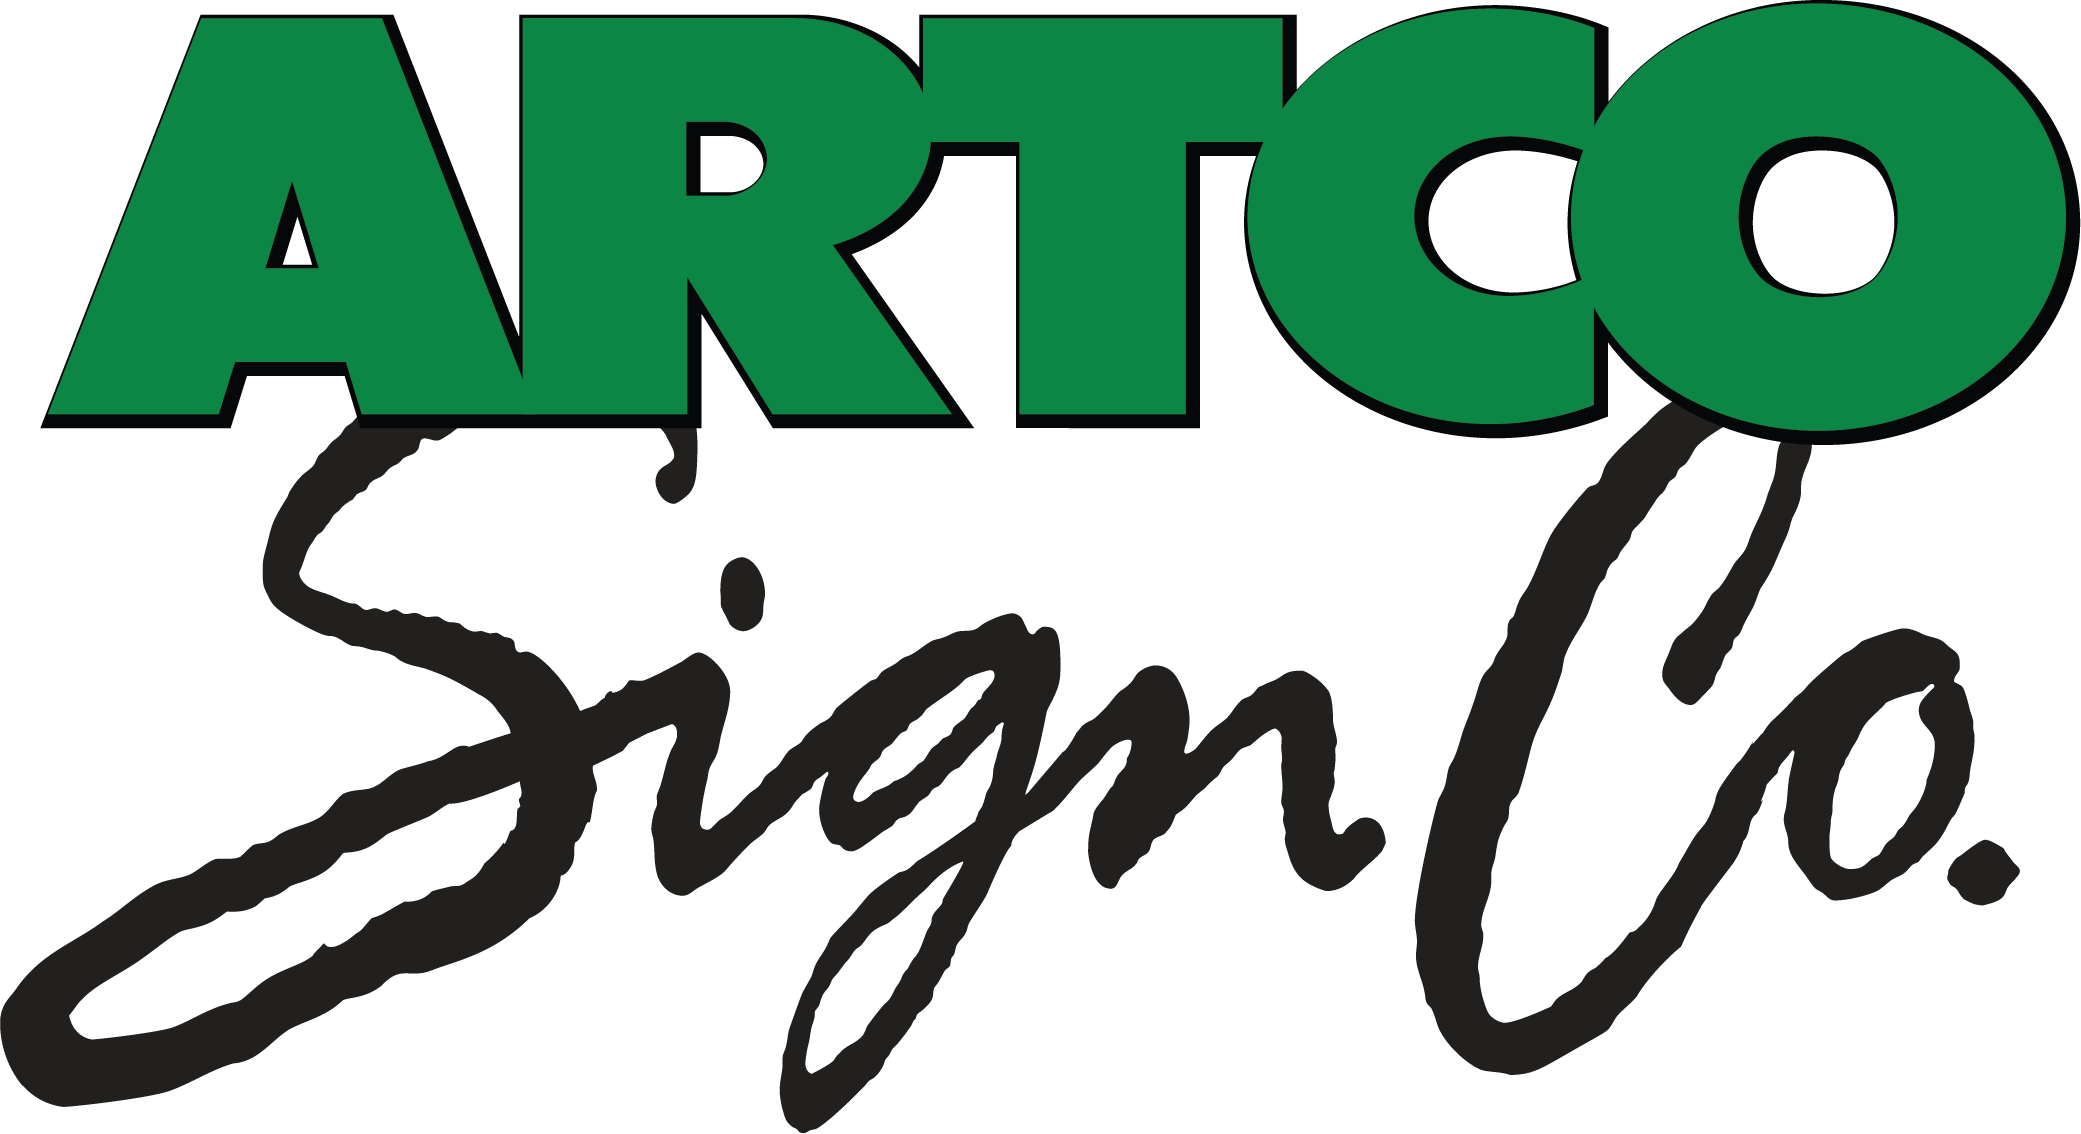 Artco Logo.png